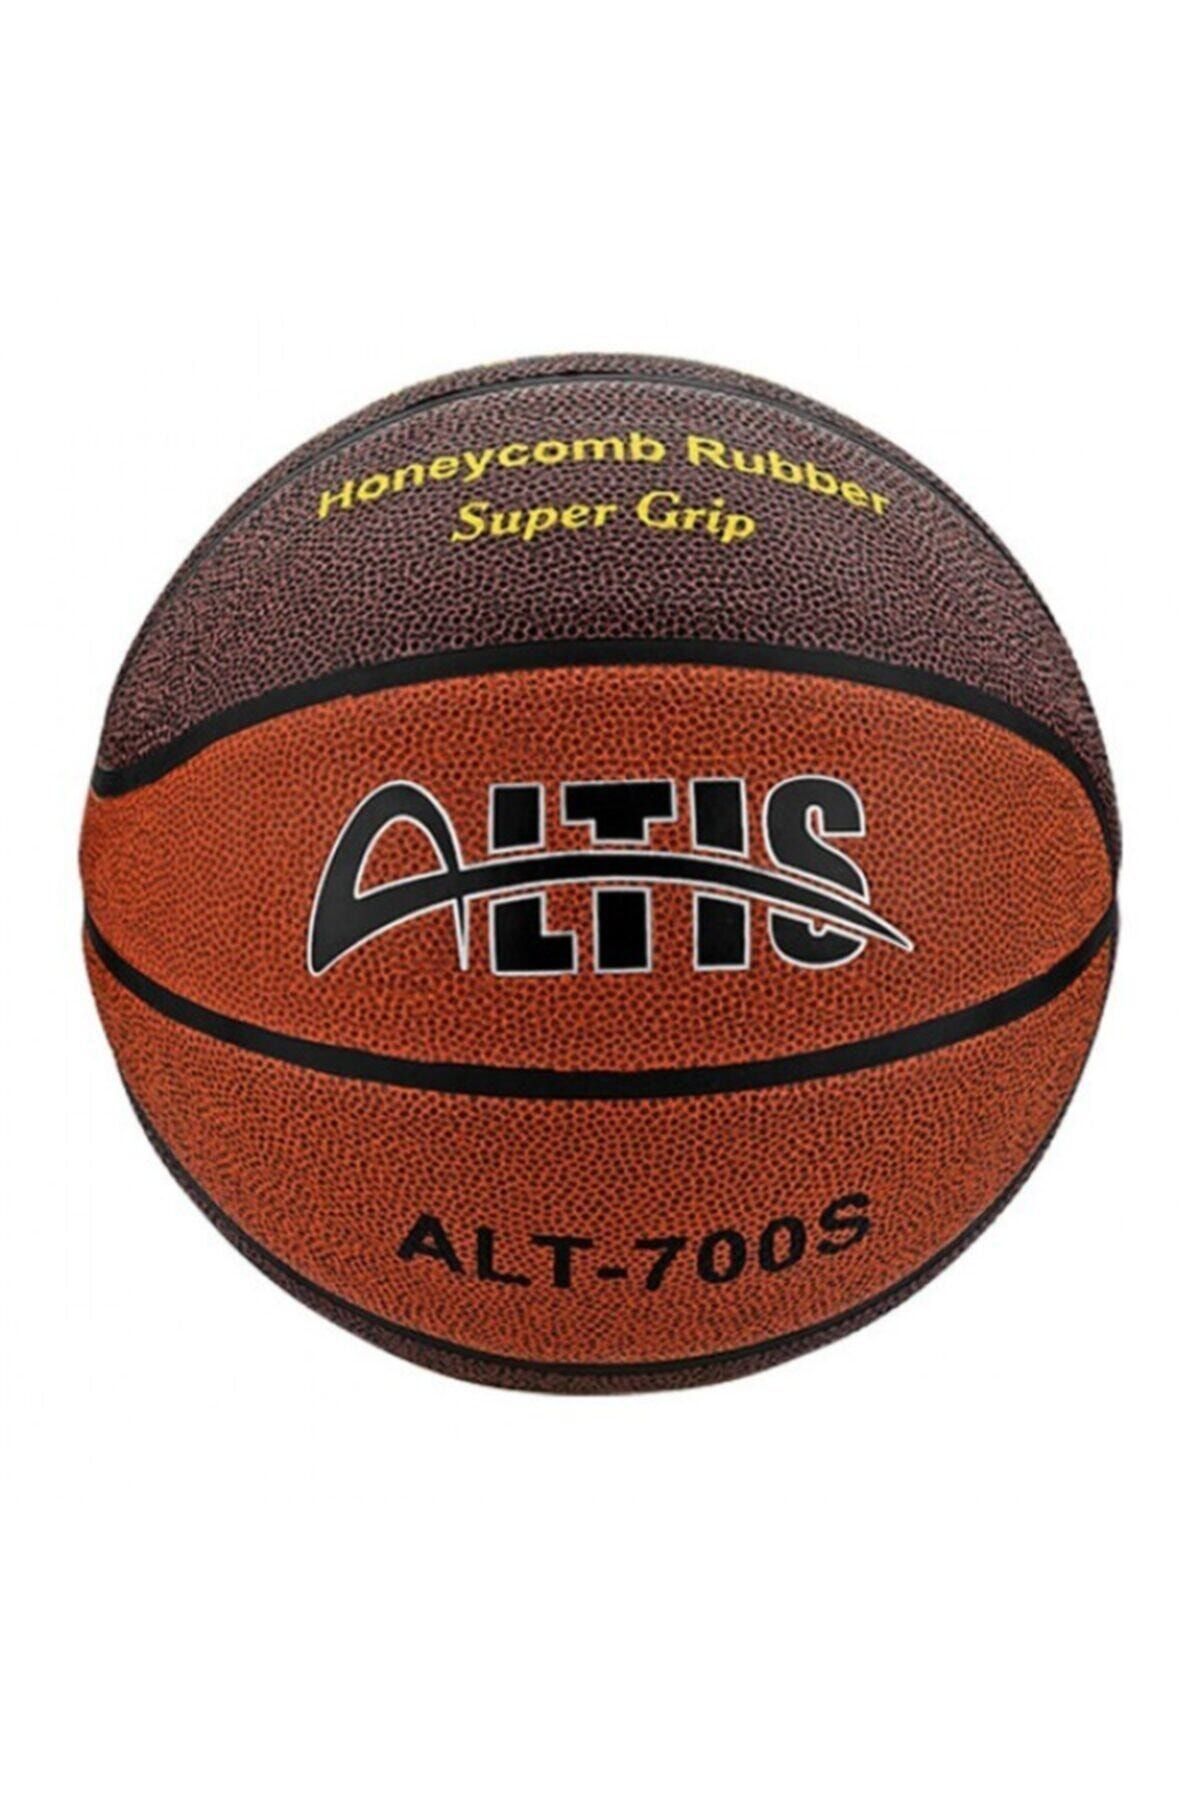 ALTIS Alt-700s Super Grip Basketbol Topu - Basket Topu - 7 No